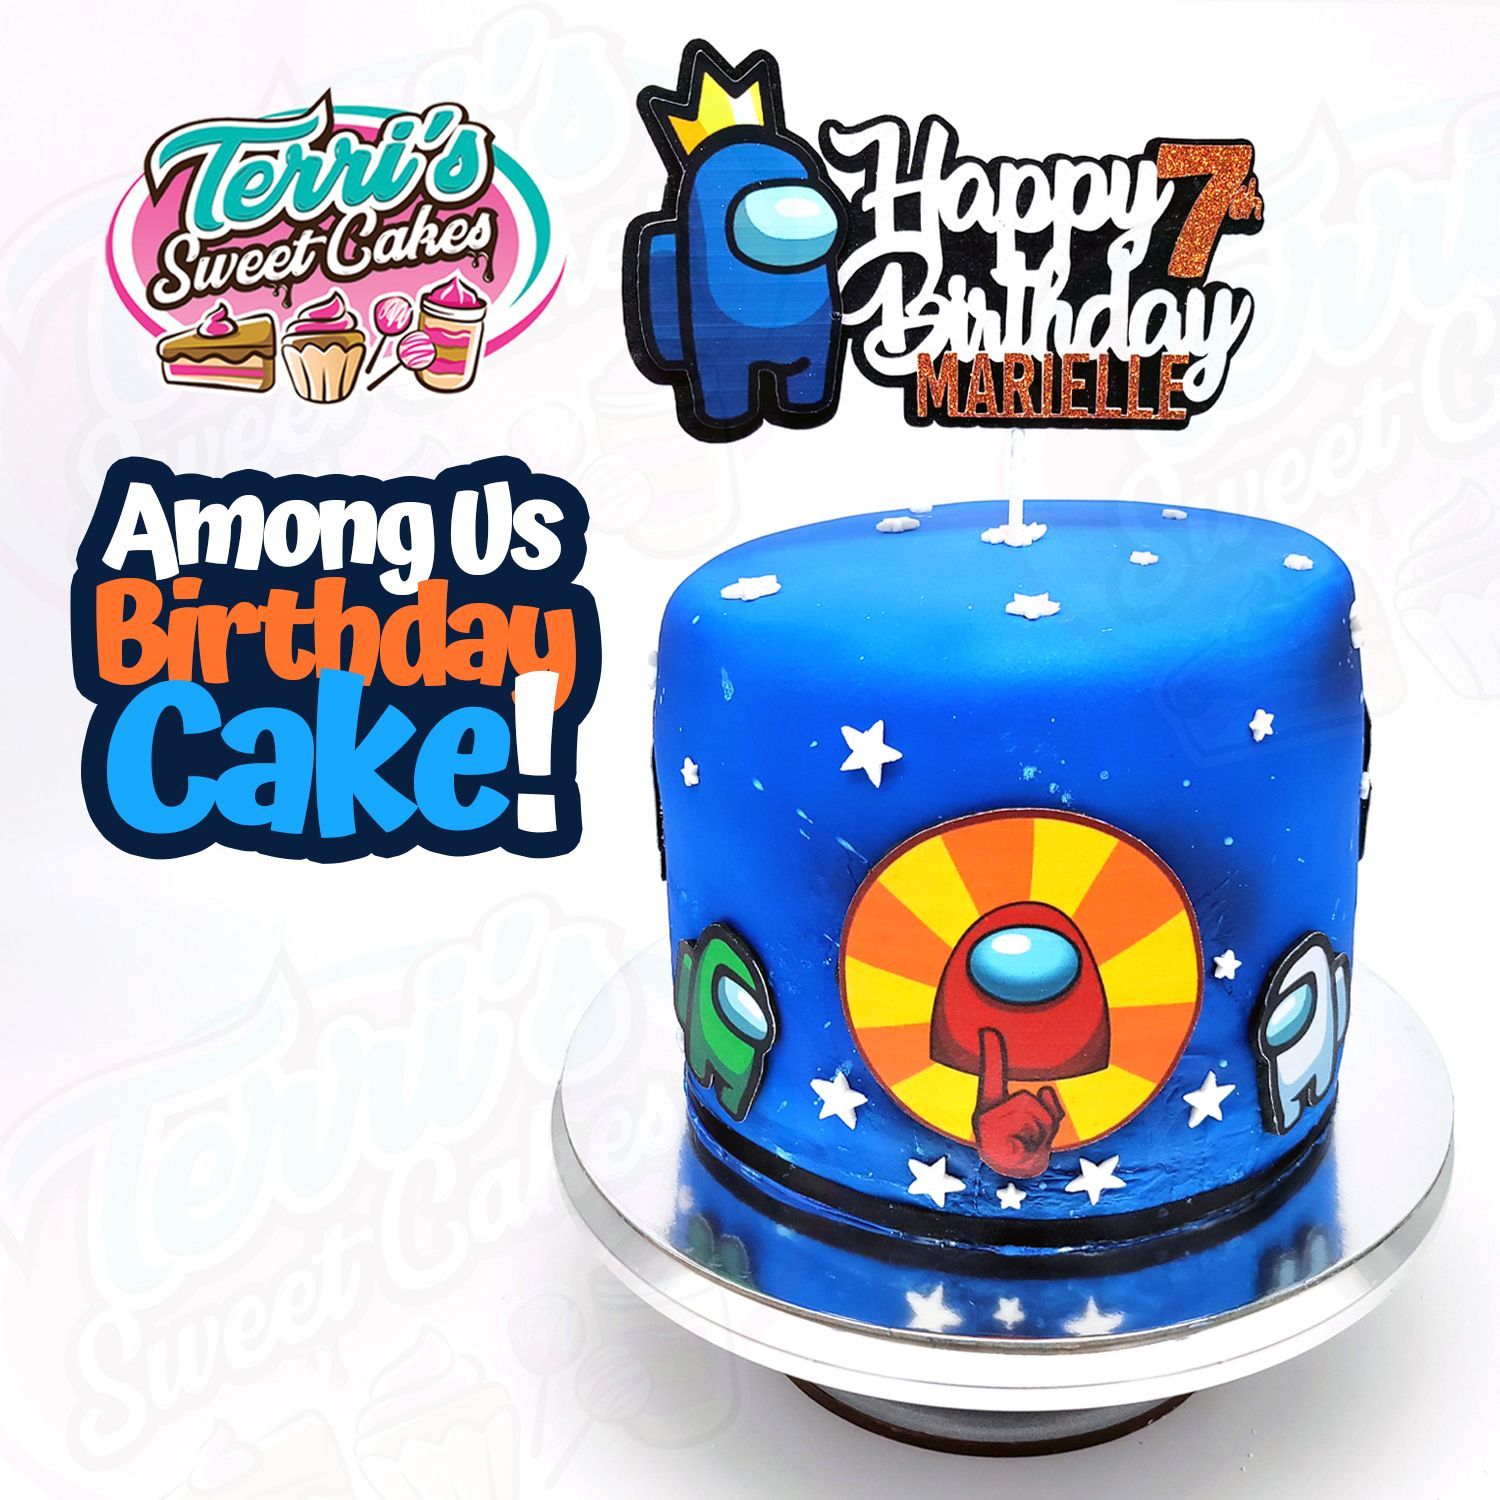 Among Us Birthday Cake by Terri's Sweet Cake!